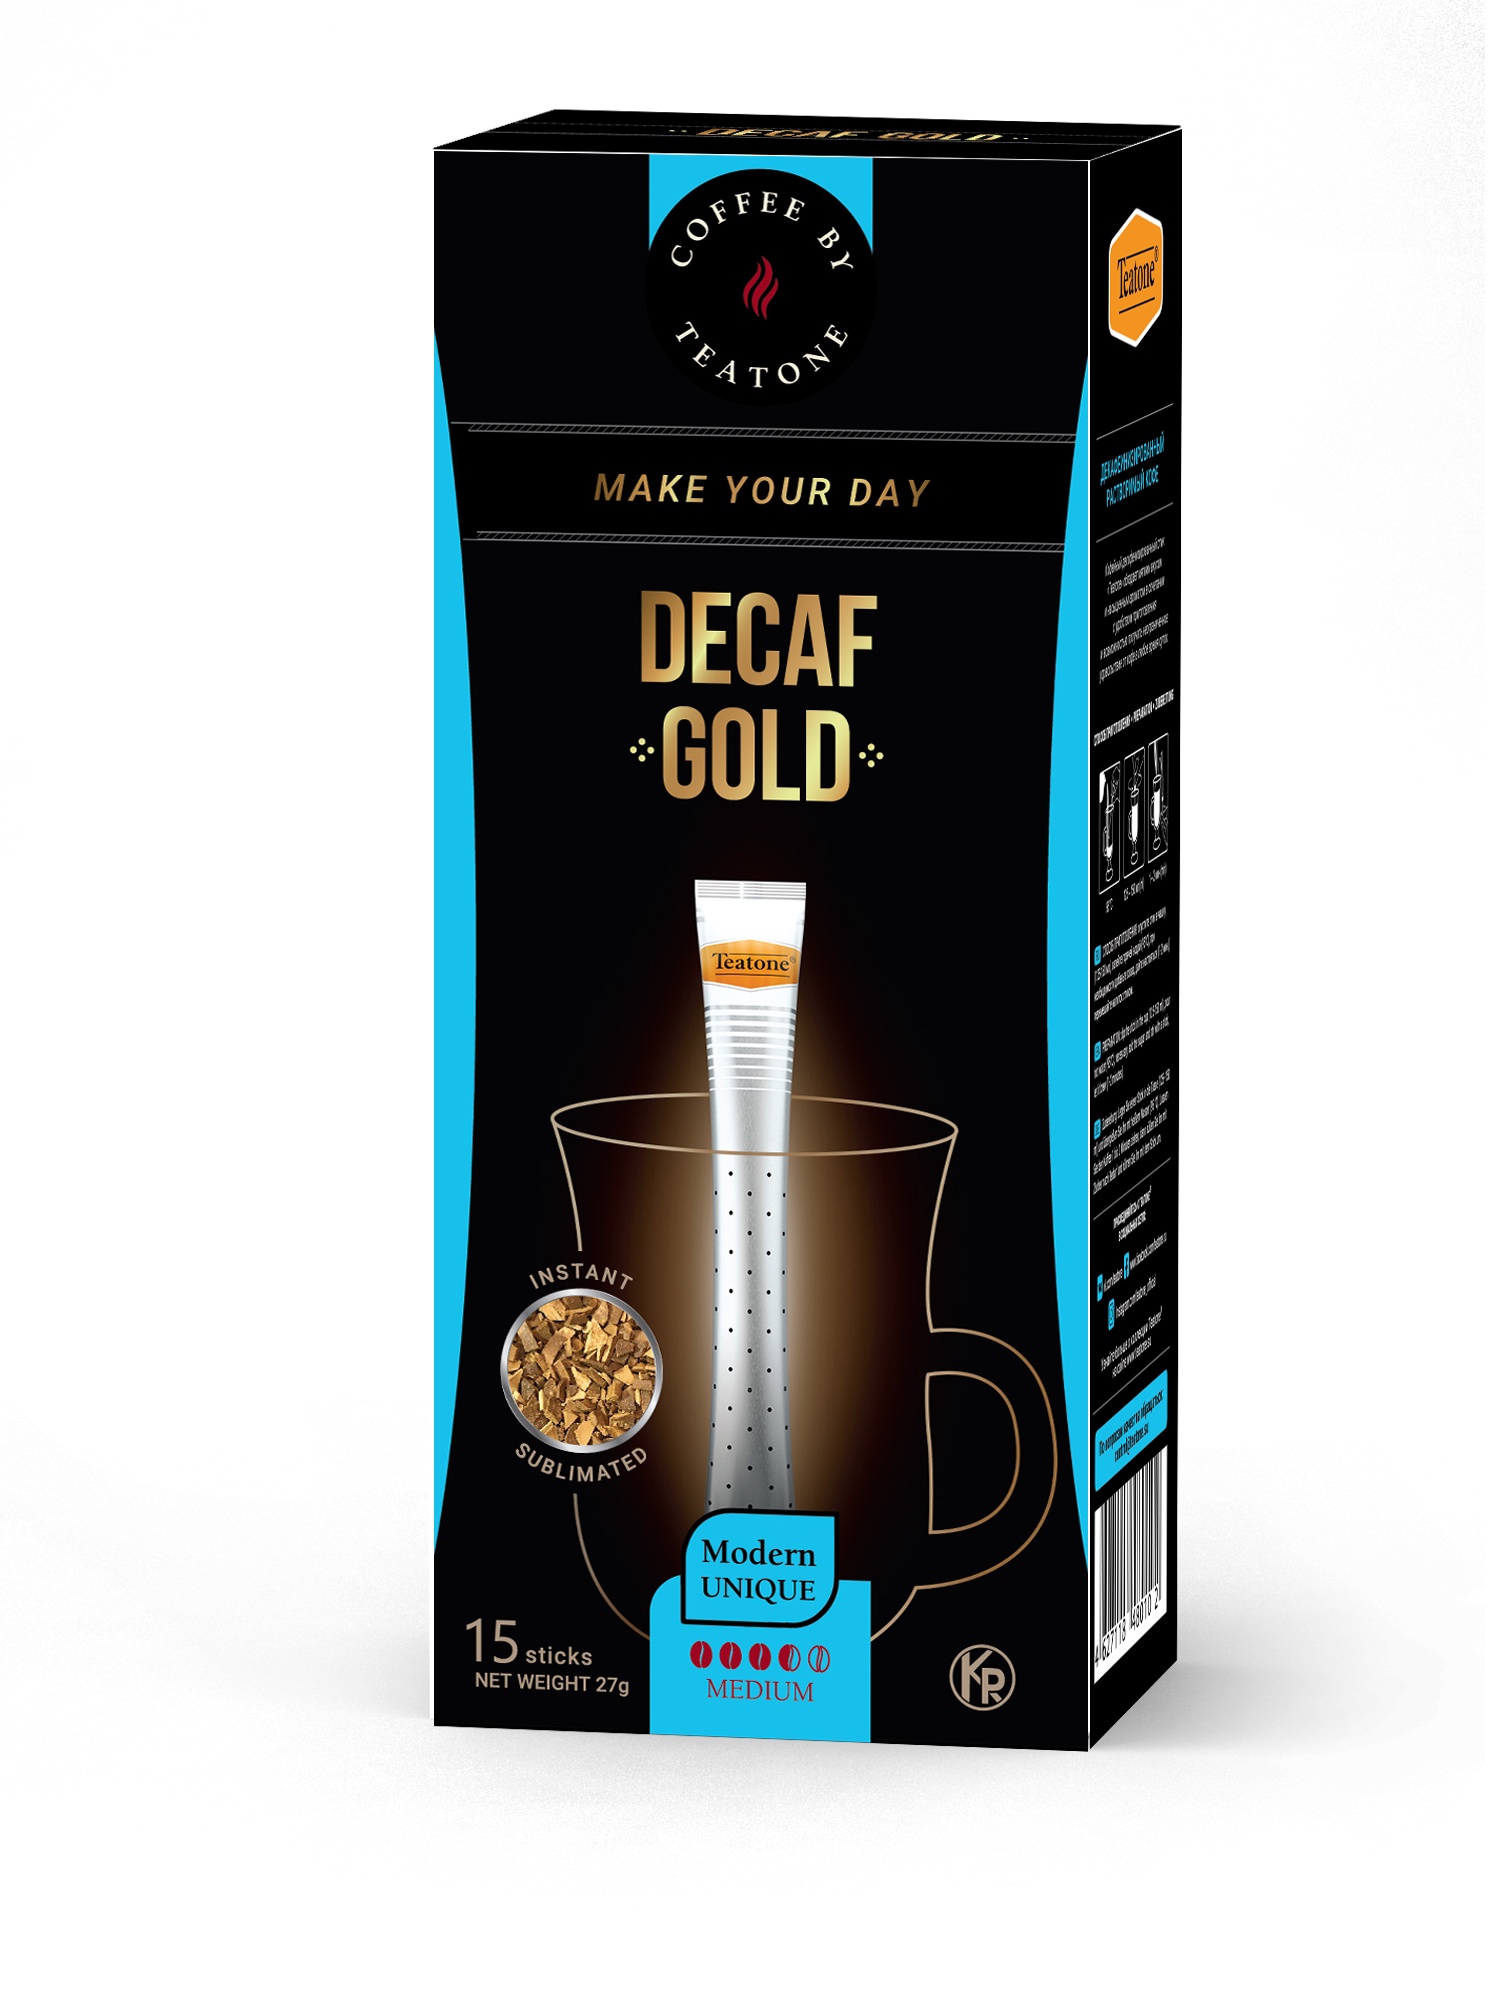 Кофеина декаф. Кофе в стиках Teatone. Decaf Gold кофе. Кофе без кофеина Decaf. Декаф Голд кофе театоне.